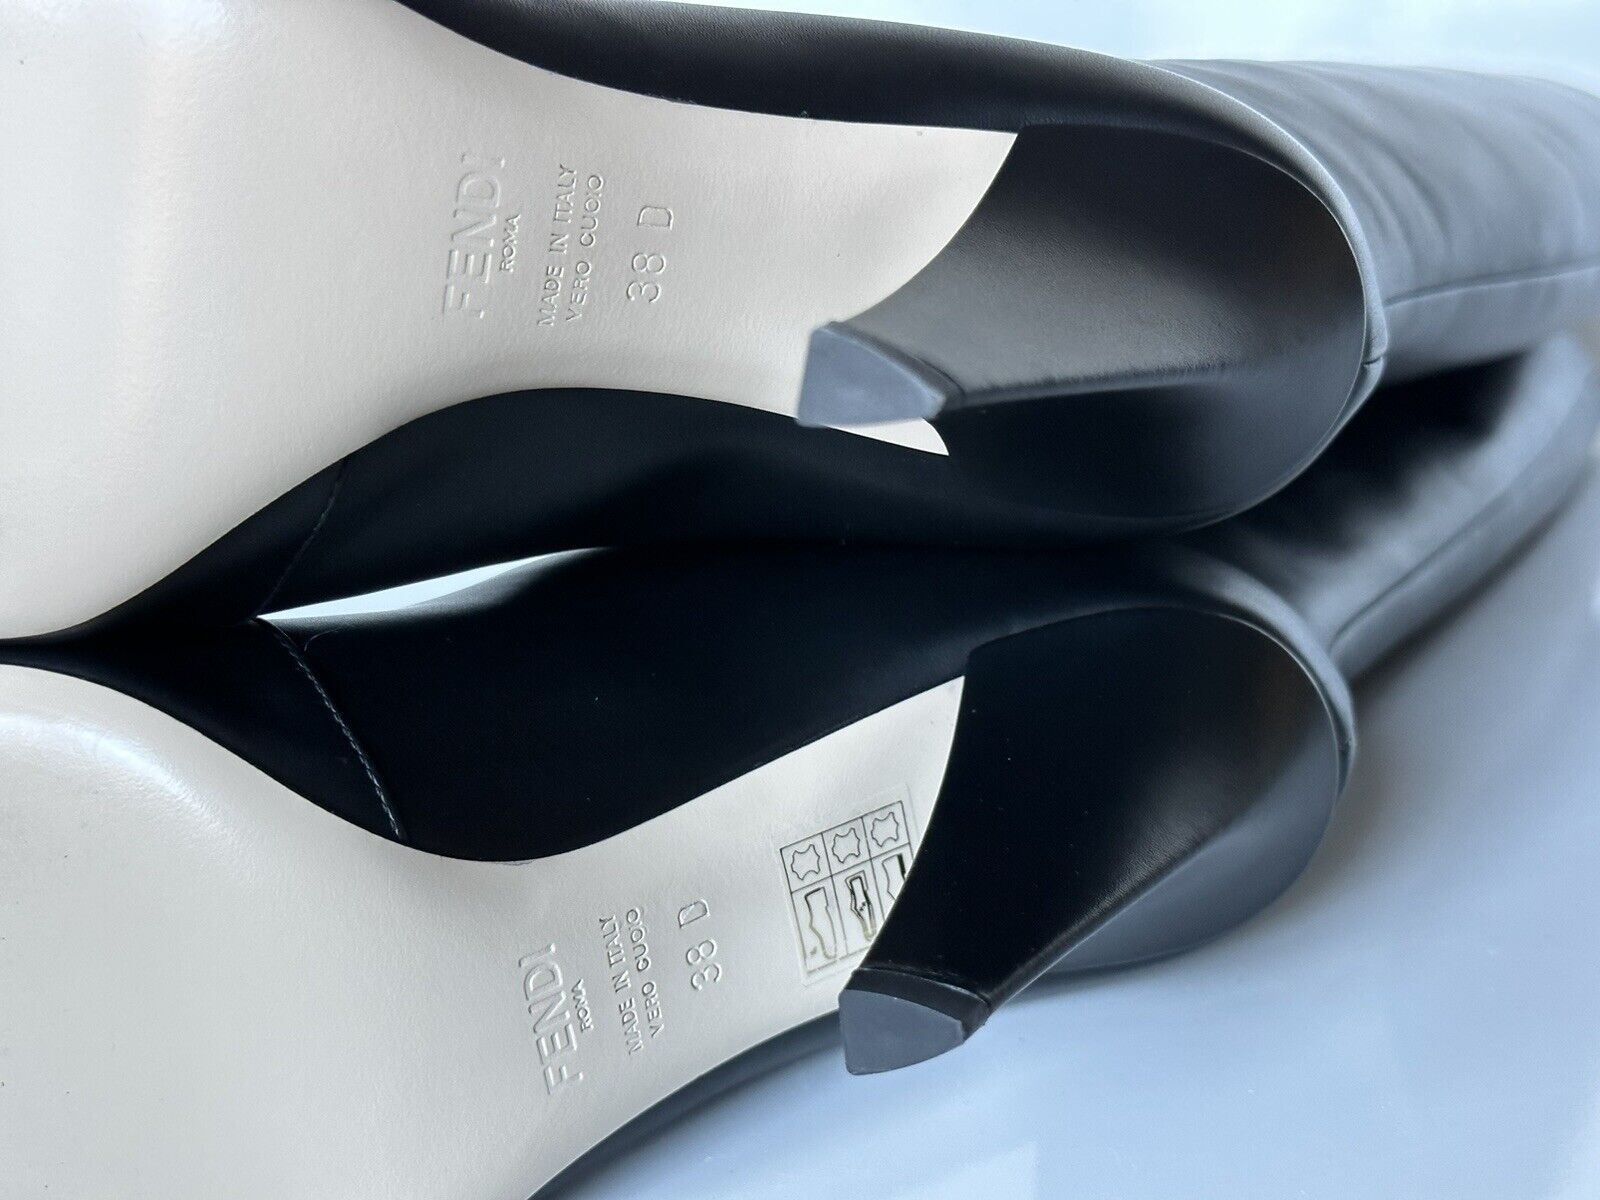 NIB $1550 Fendi Karligraphy Leather Knee Height Black Boots 8 US (38 Eu) 8W8223